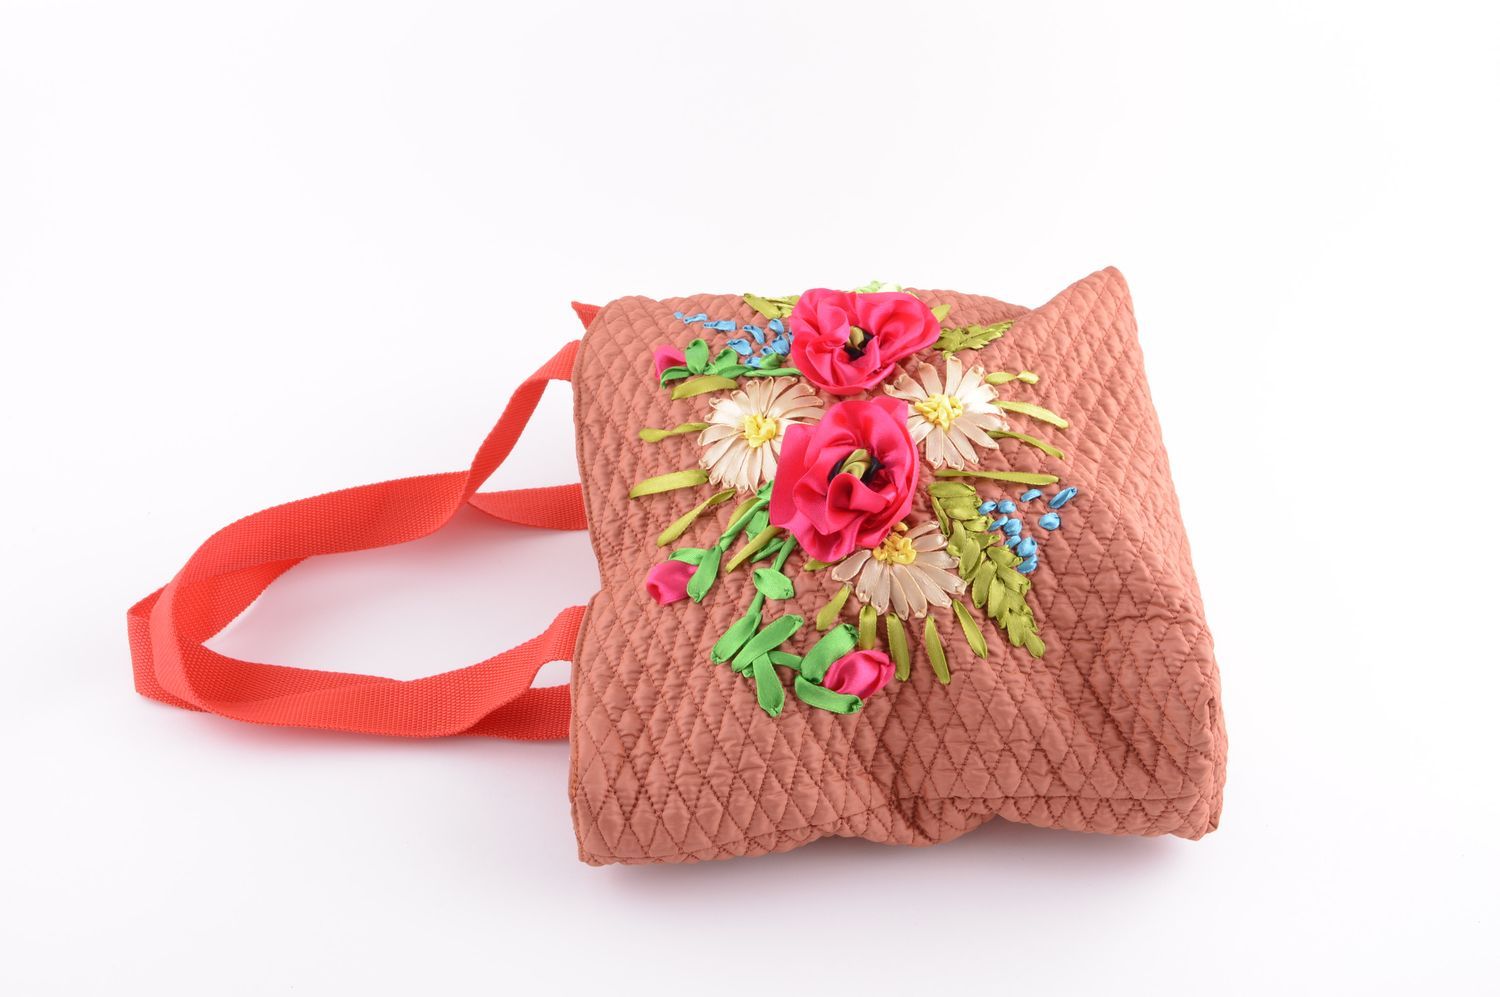 Handbag With Plastic Canvas, Handmade Shoulder Bag, Fashion Ladies Bag,  Knit Crochet Bag, Christmas, Birthday Gift for Women, Bag on a Chain - Etsy  | Canvas bag diy, Diy bags patterns, Diy